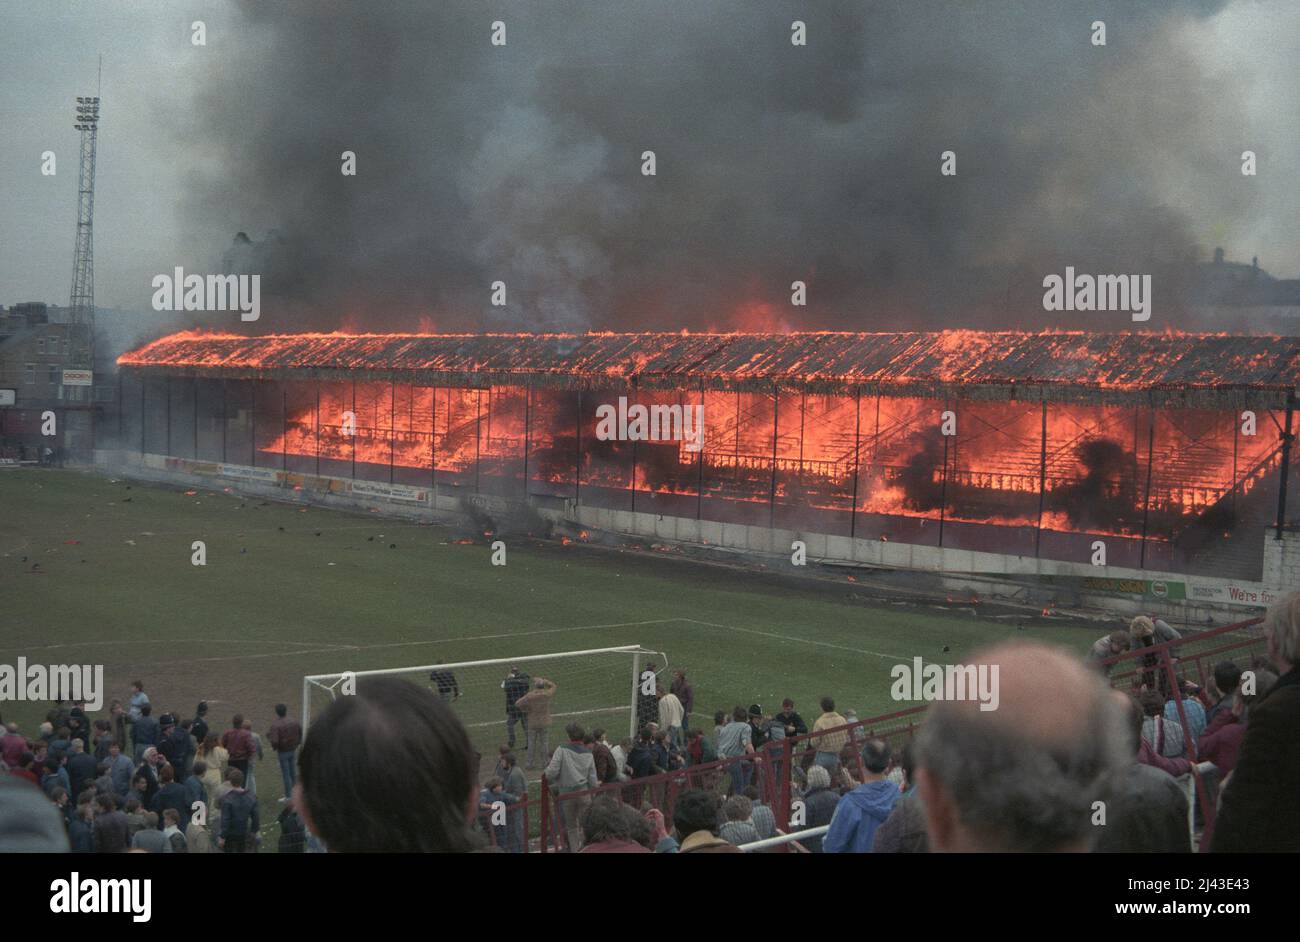 Bradford City Fire Disaster at Valley Parade 1985 Stock Photo